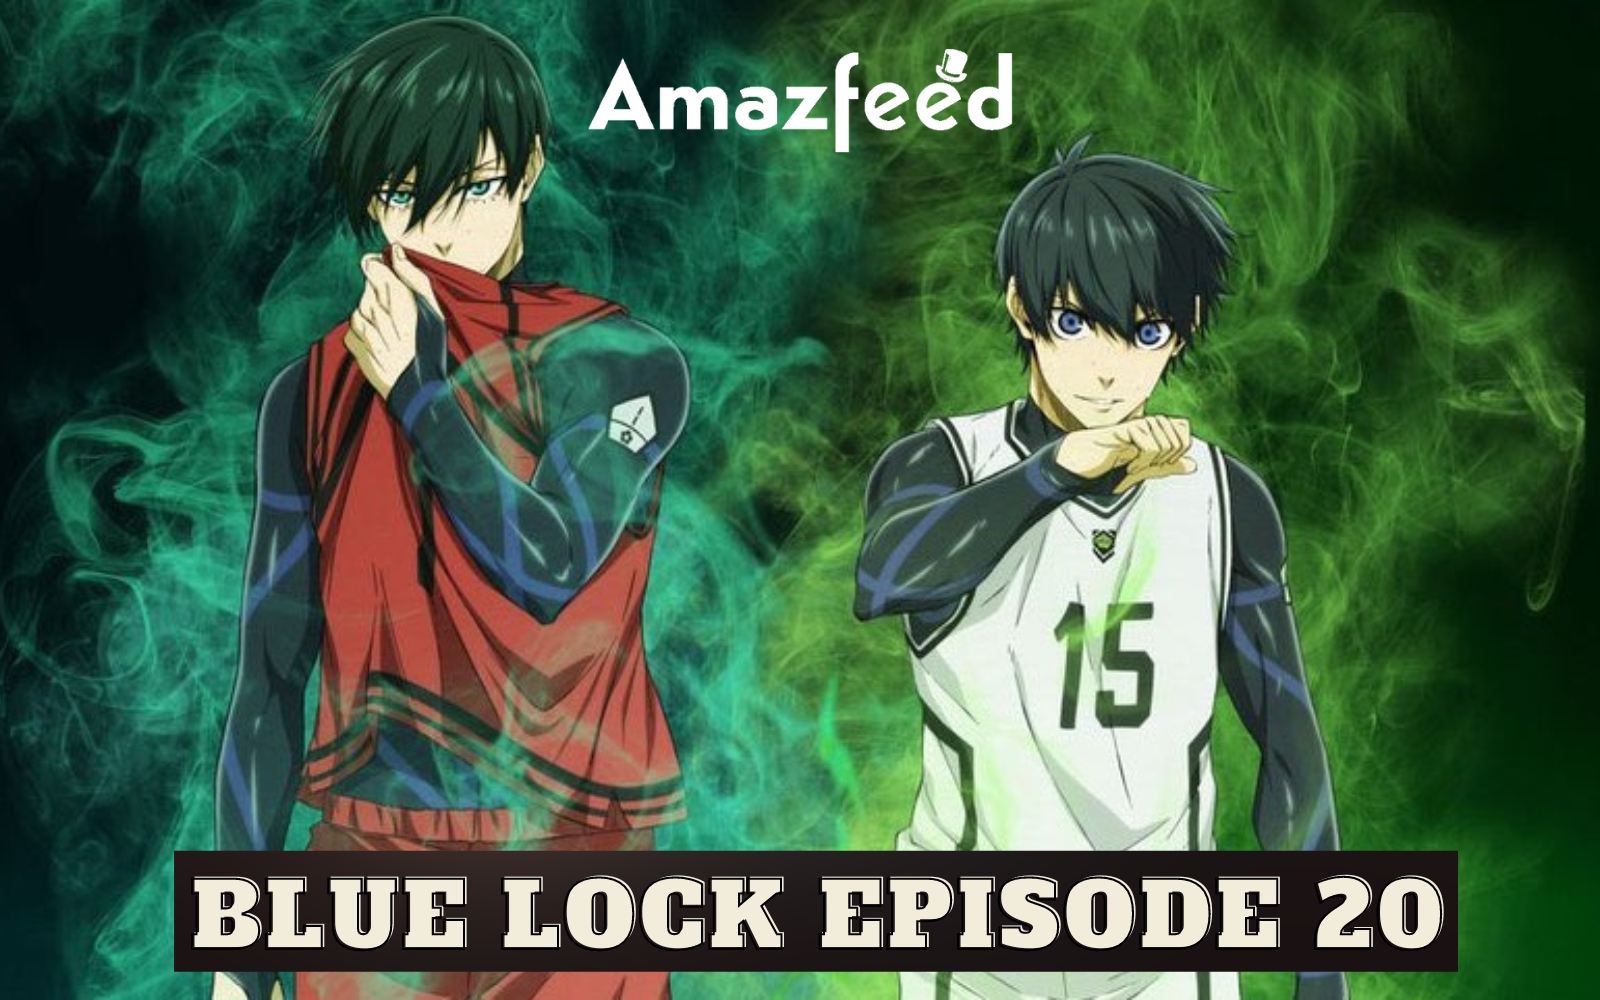 Blue Lock Episode 20 Release Date & Time